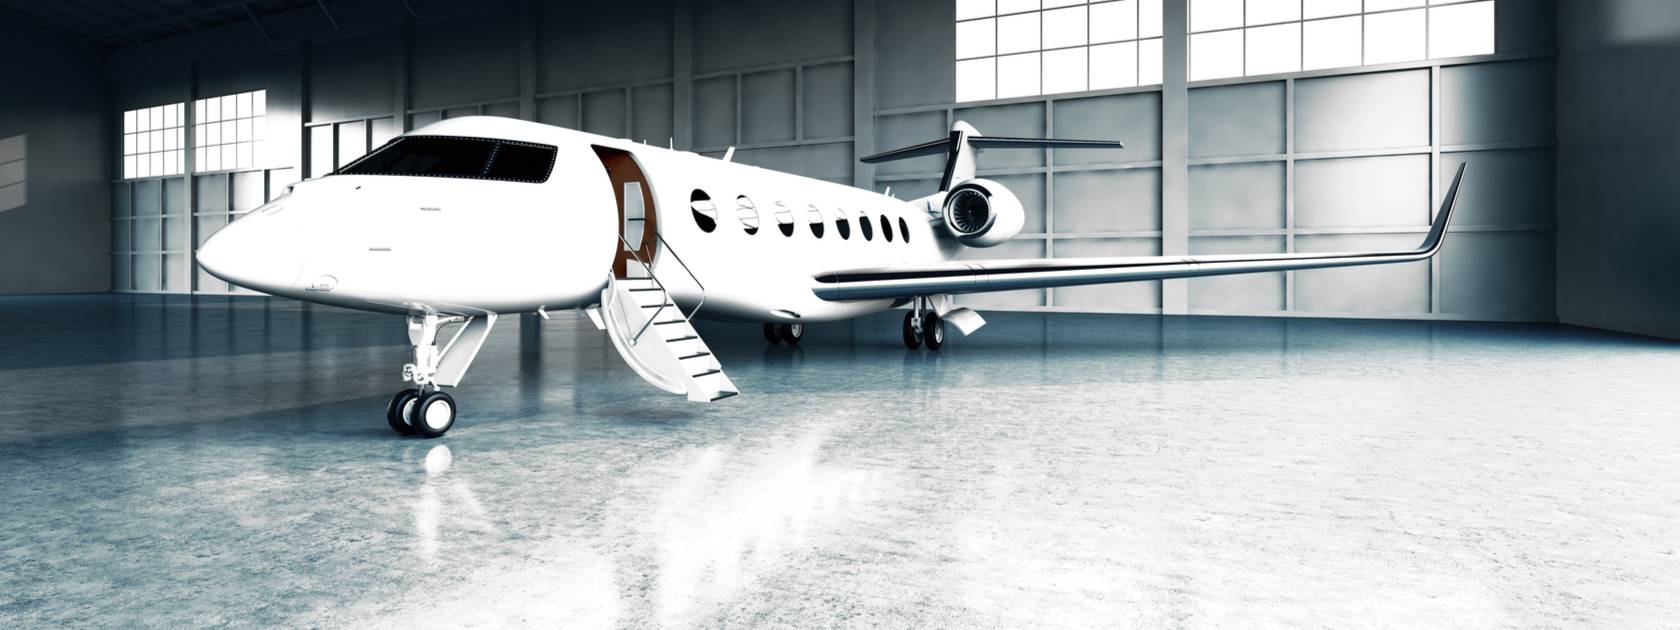 white private jet in a hangar